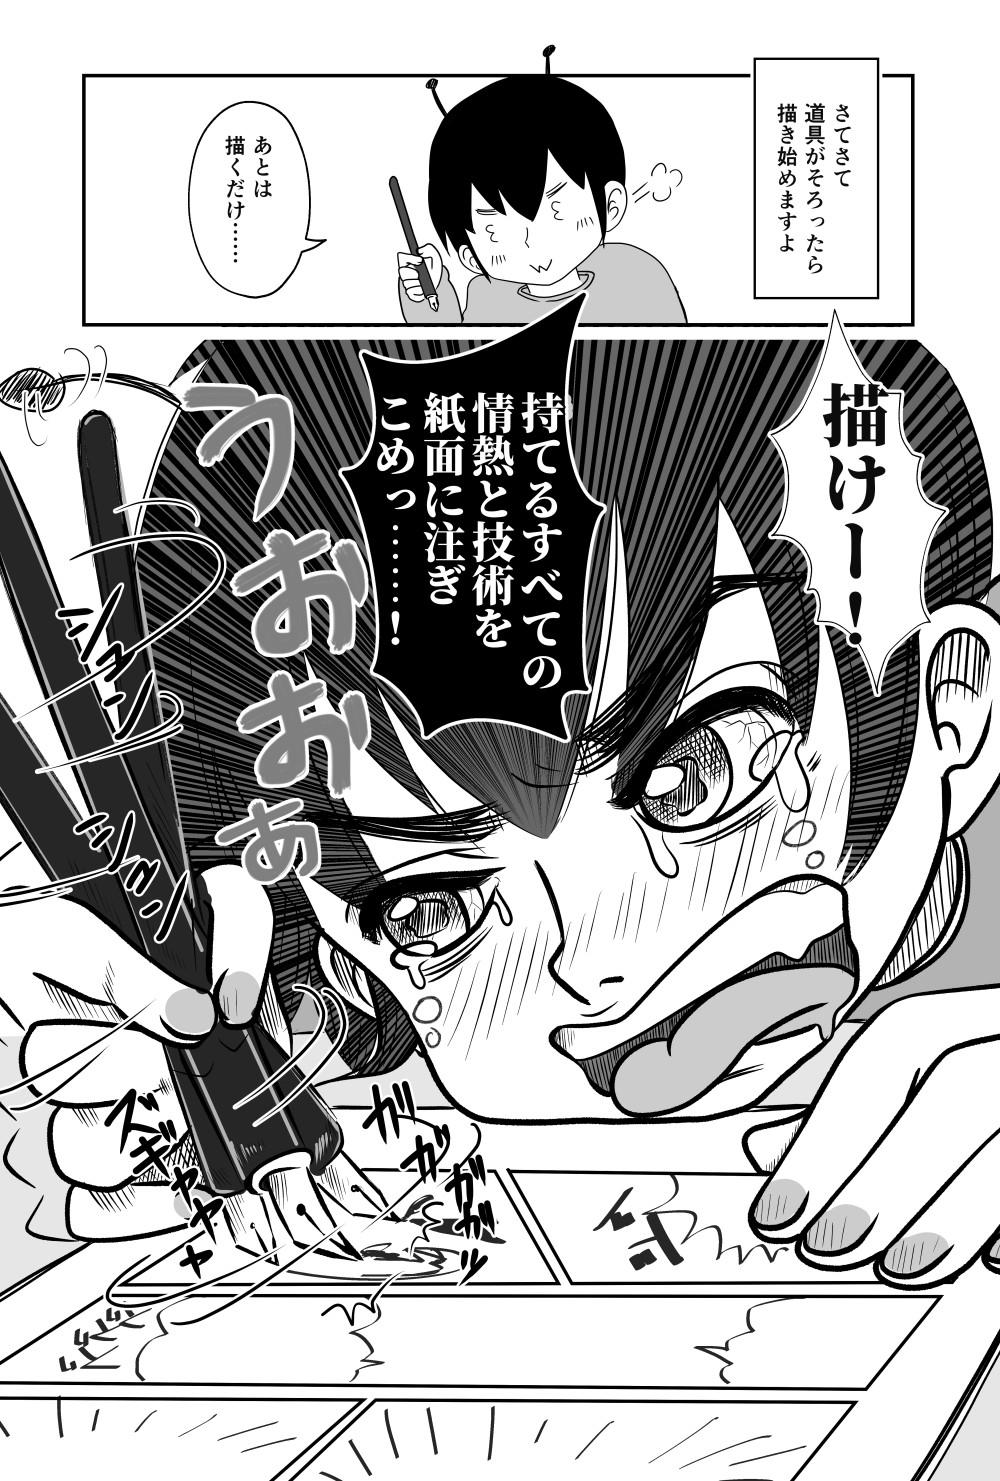 30_manga02_1000.jpg